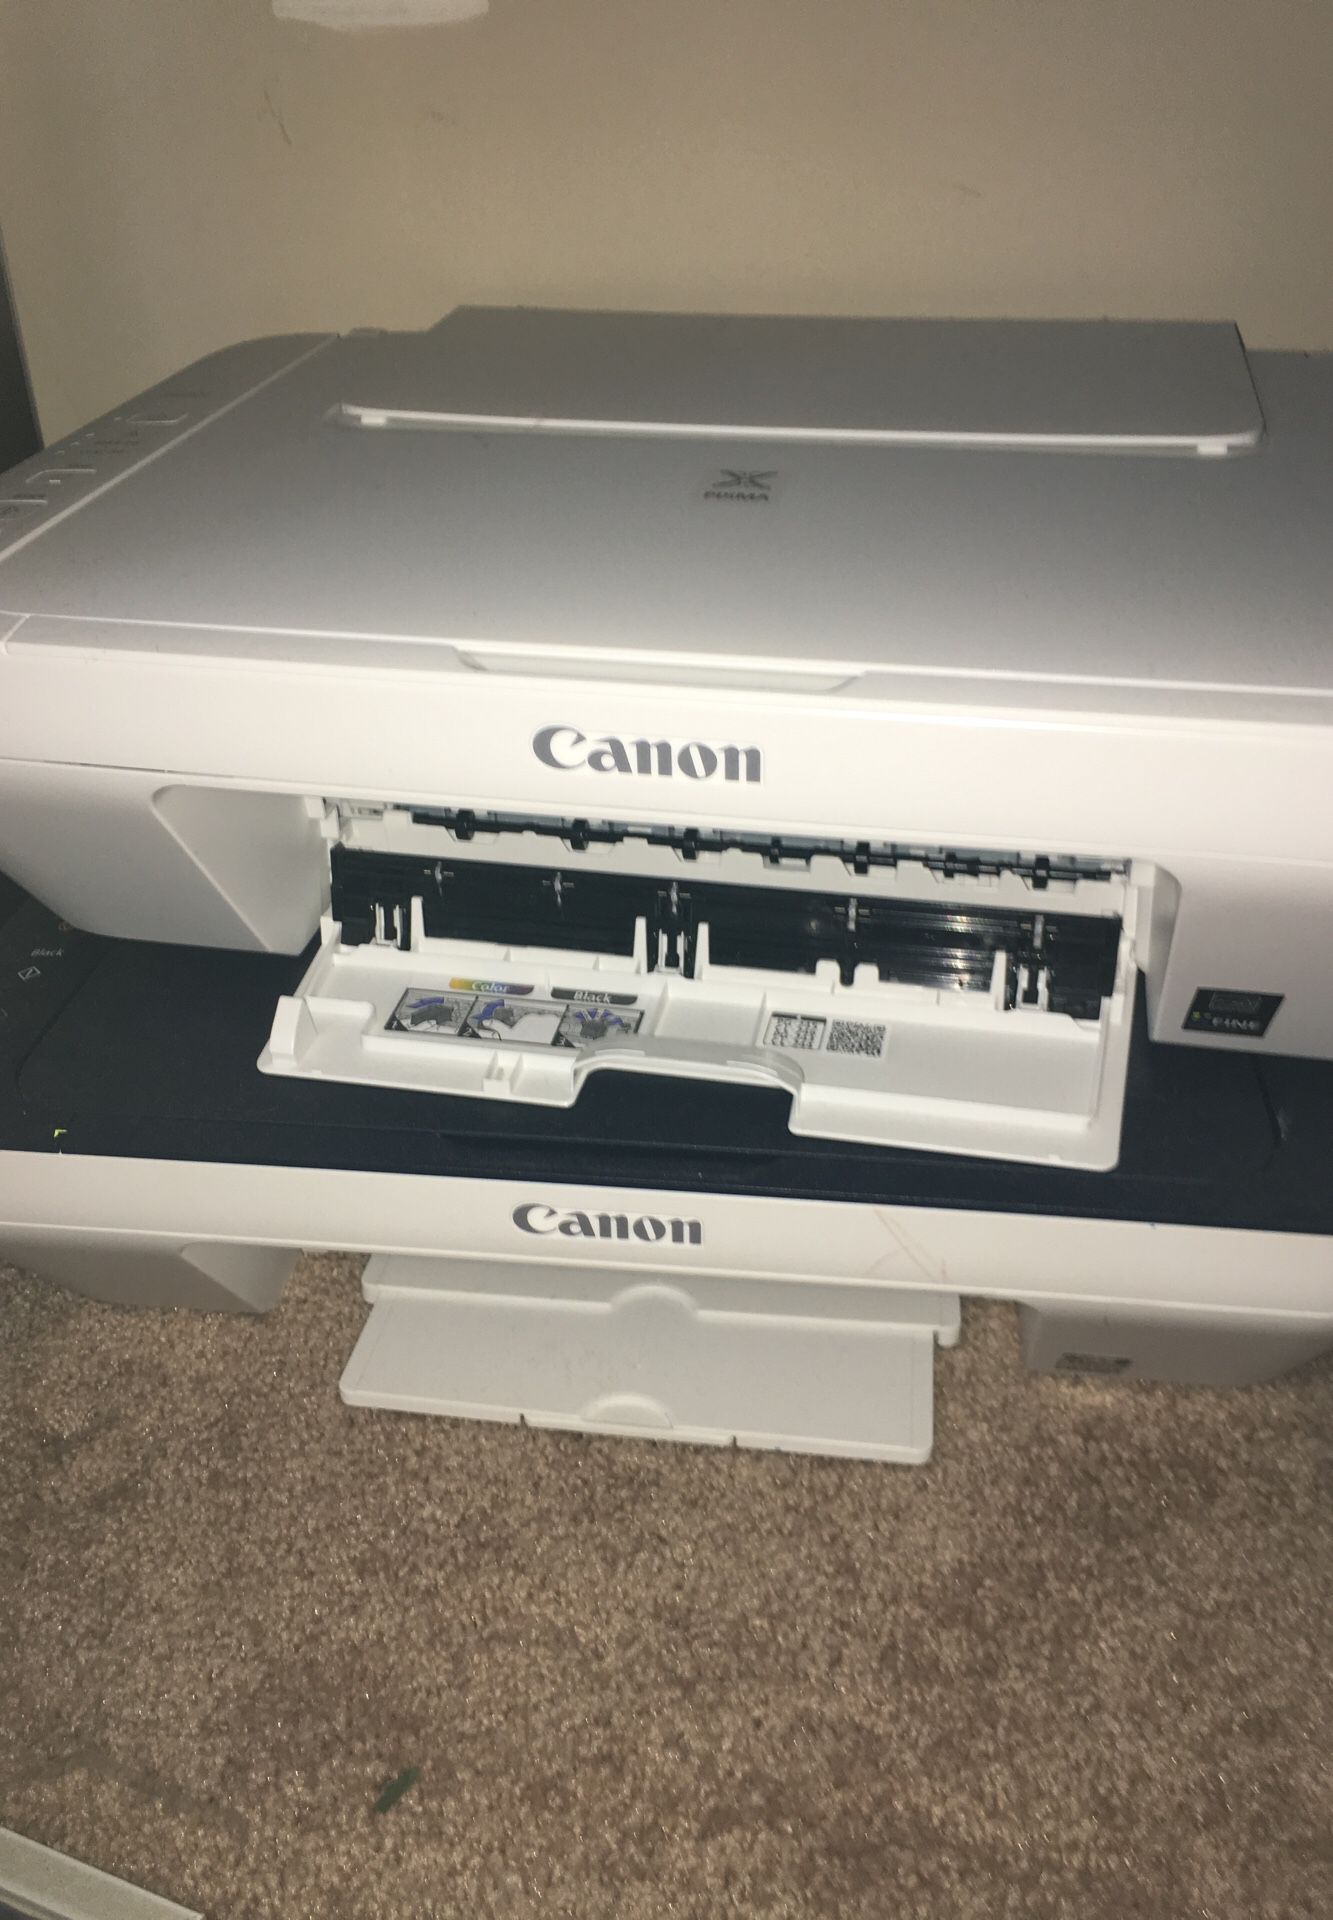 Canon printer (all in one)